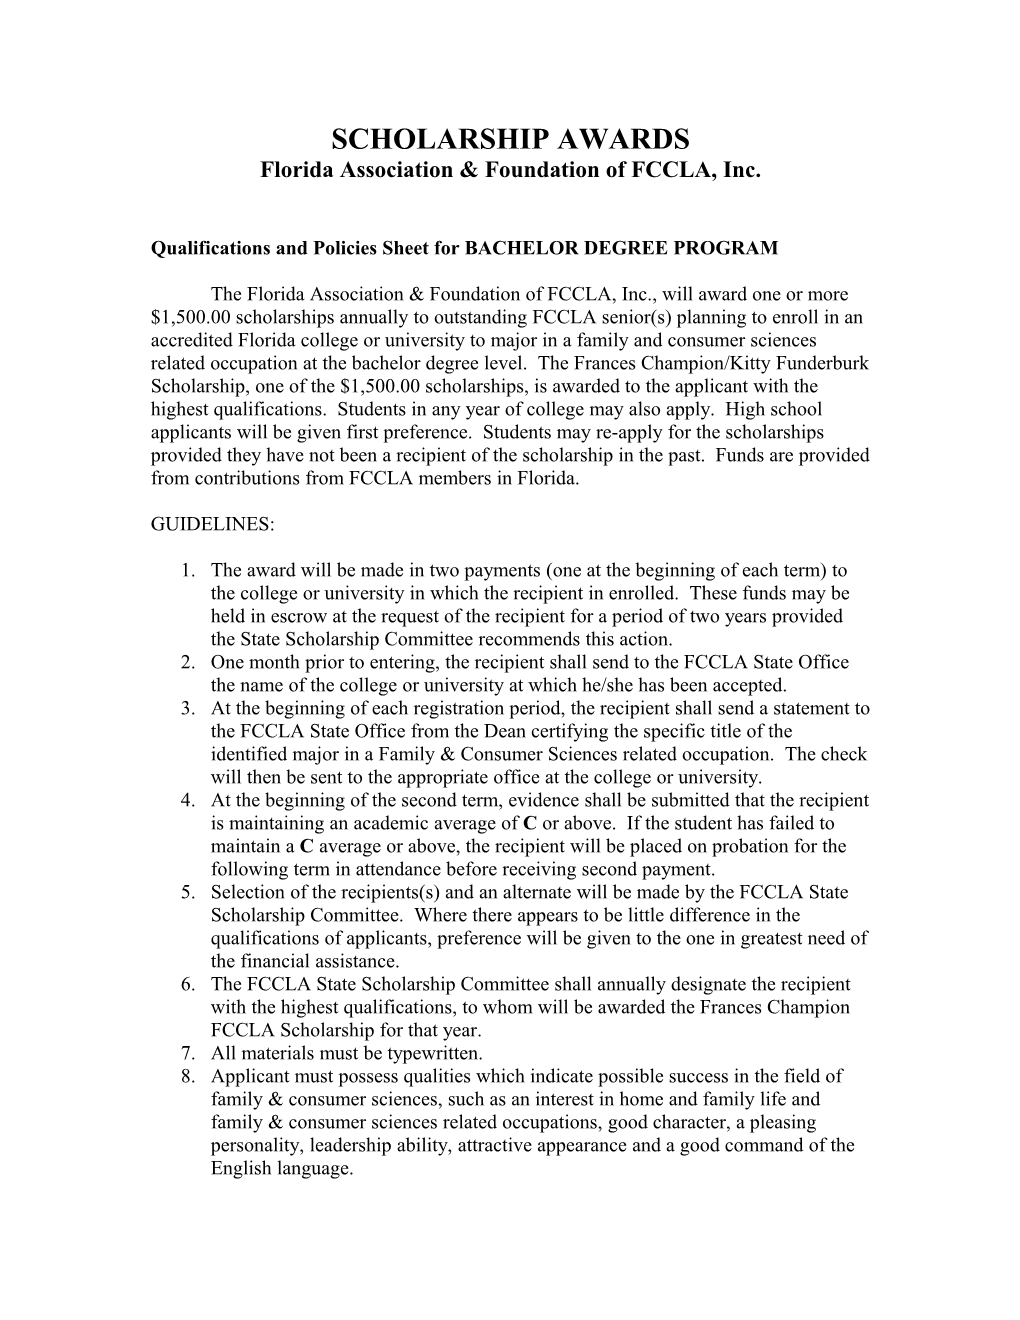 Florida Association & Foundation of FCCLA, Inc